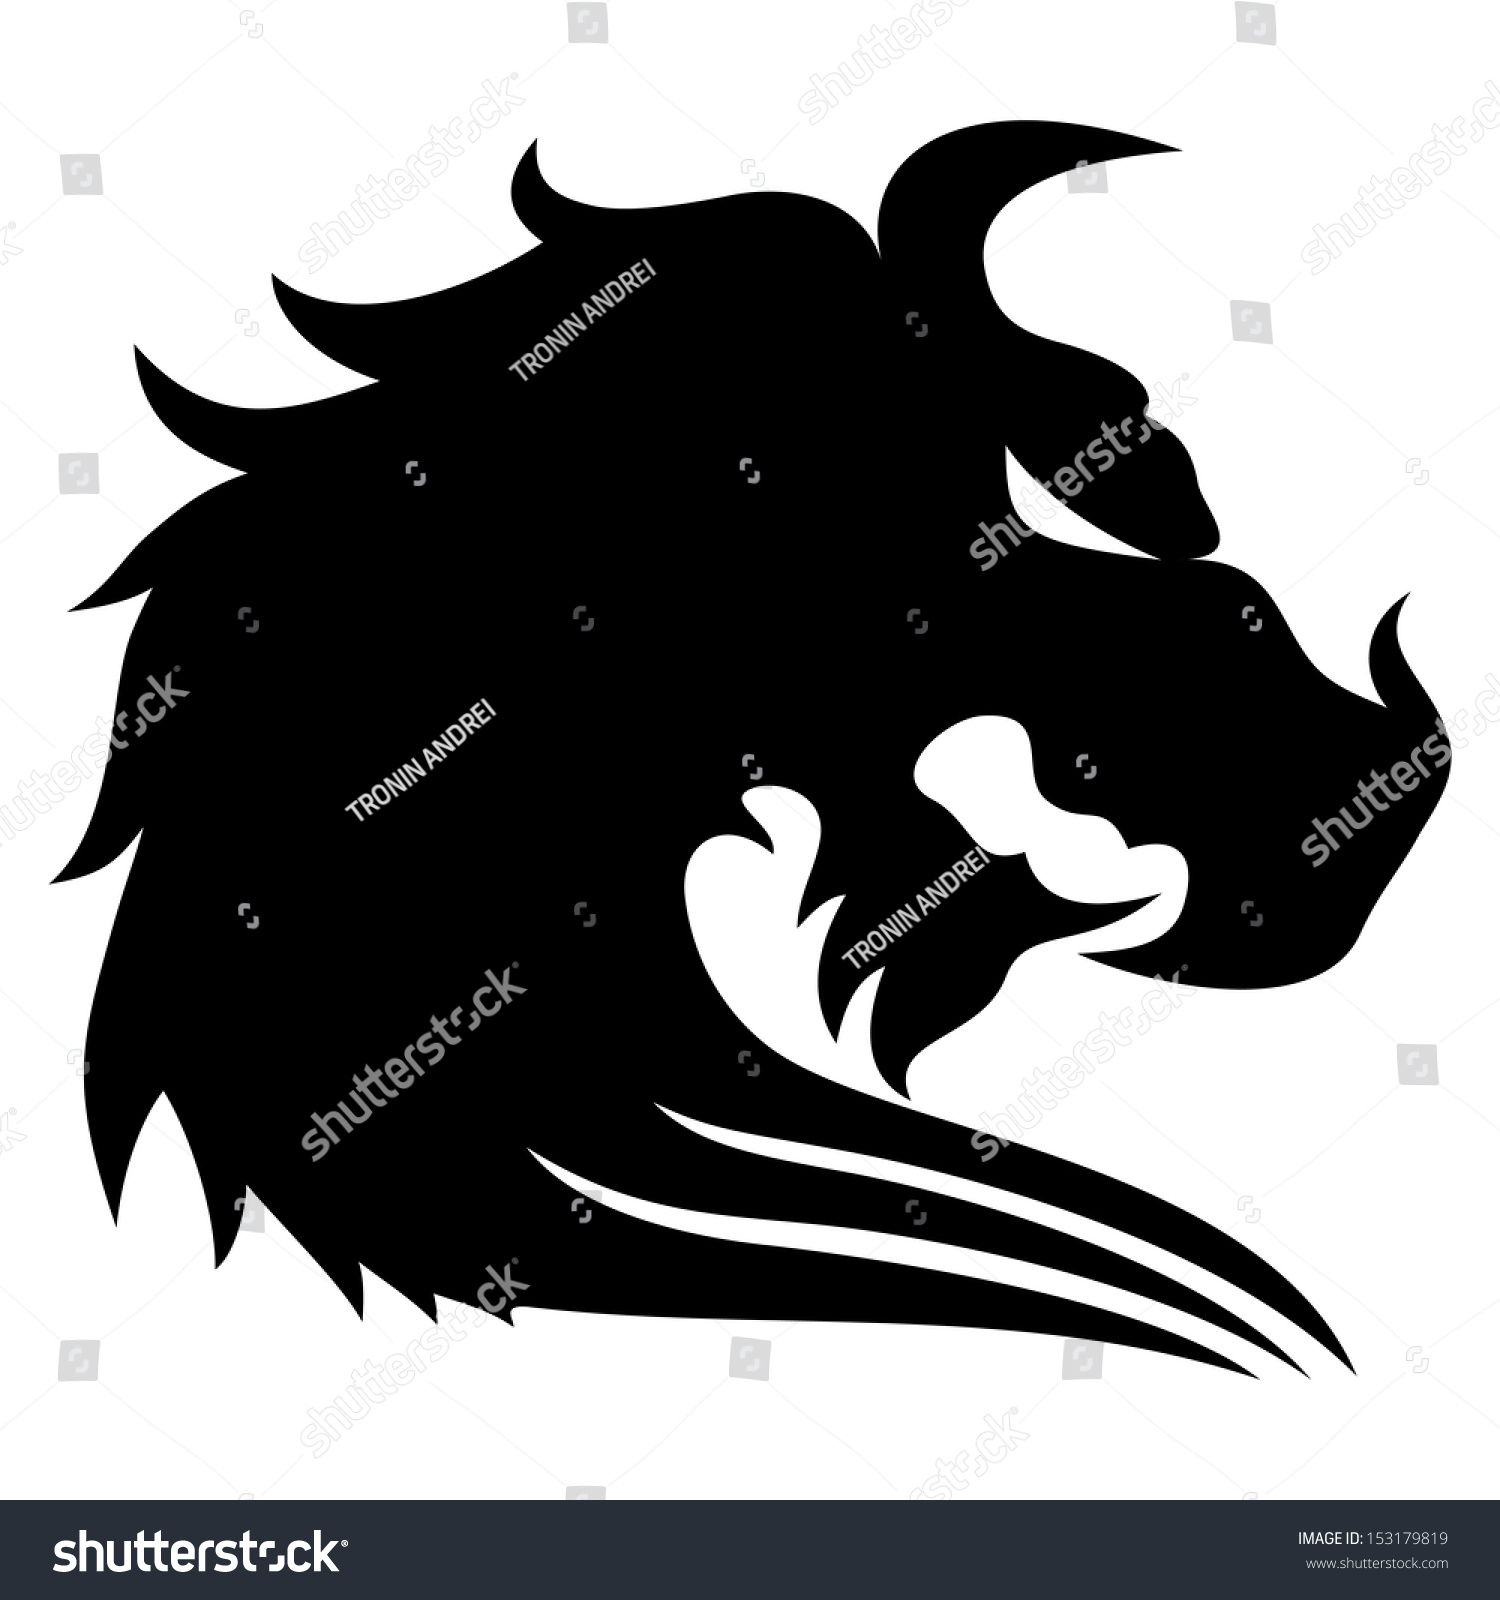 Vector. Black Dragon. - 153179819 : Shutterstock